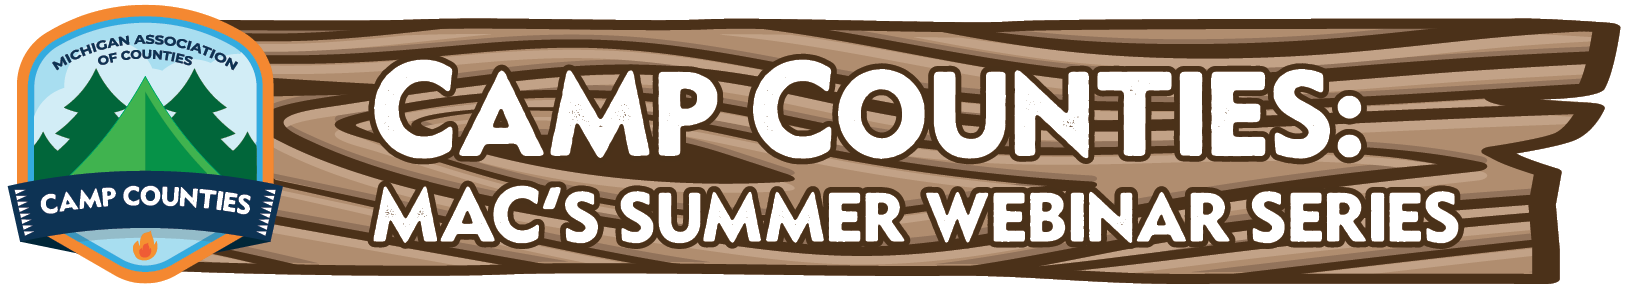 Camp Counties: MAC's summer webinar series - The Michigan Association ...